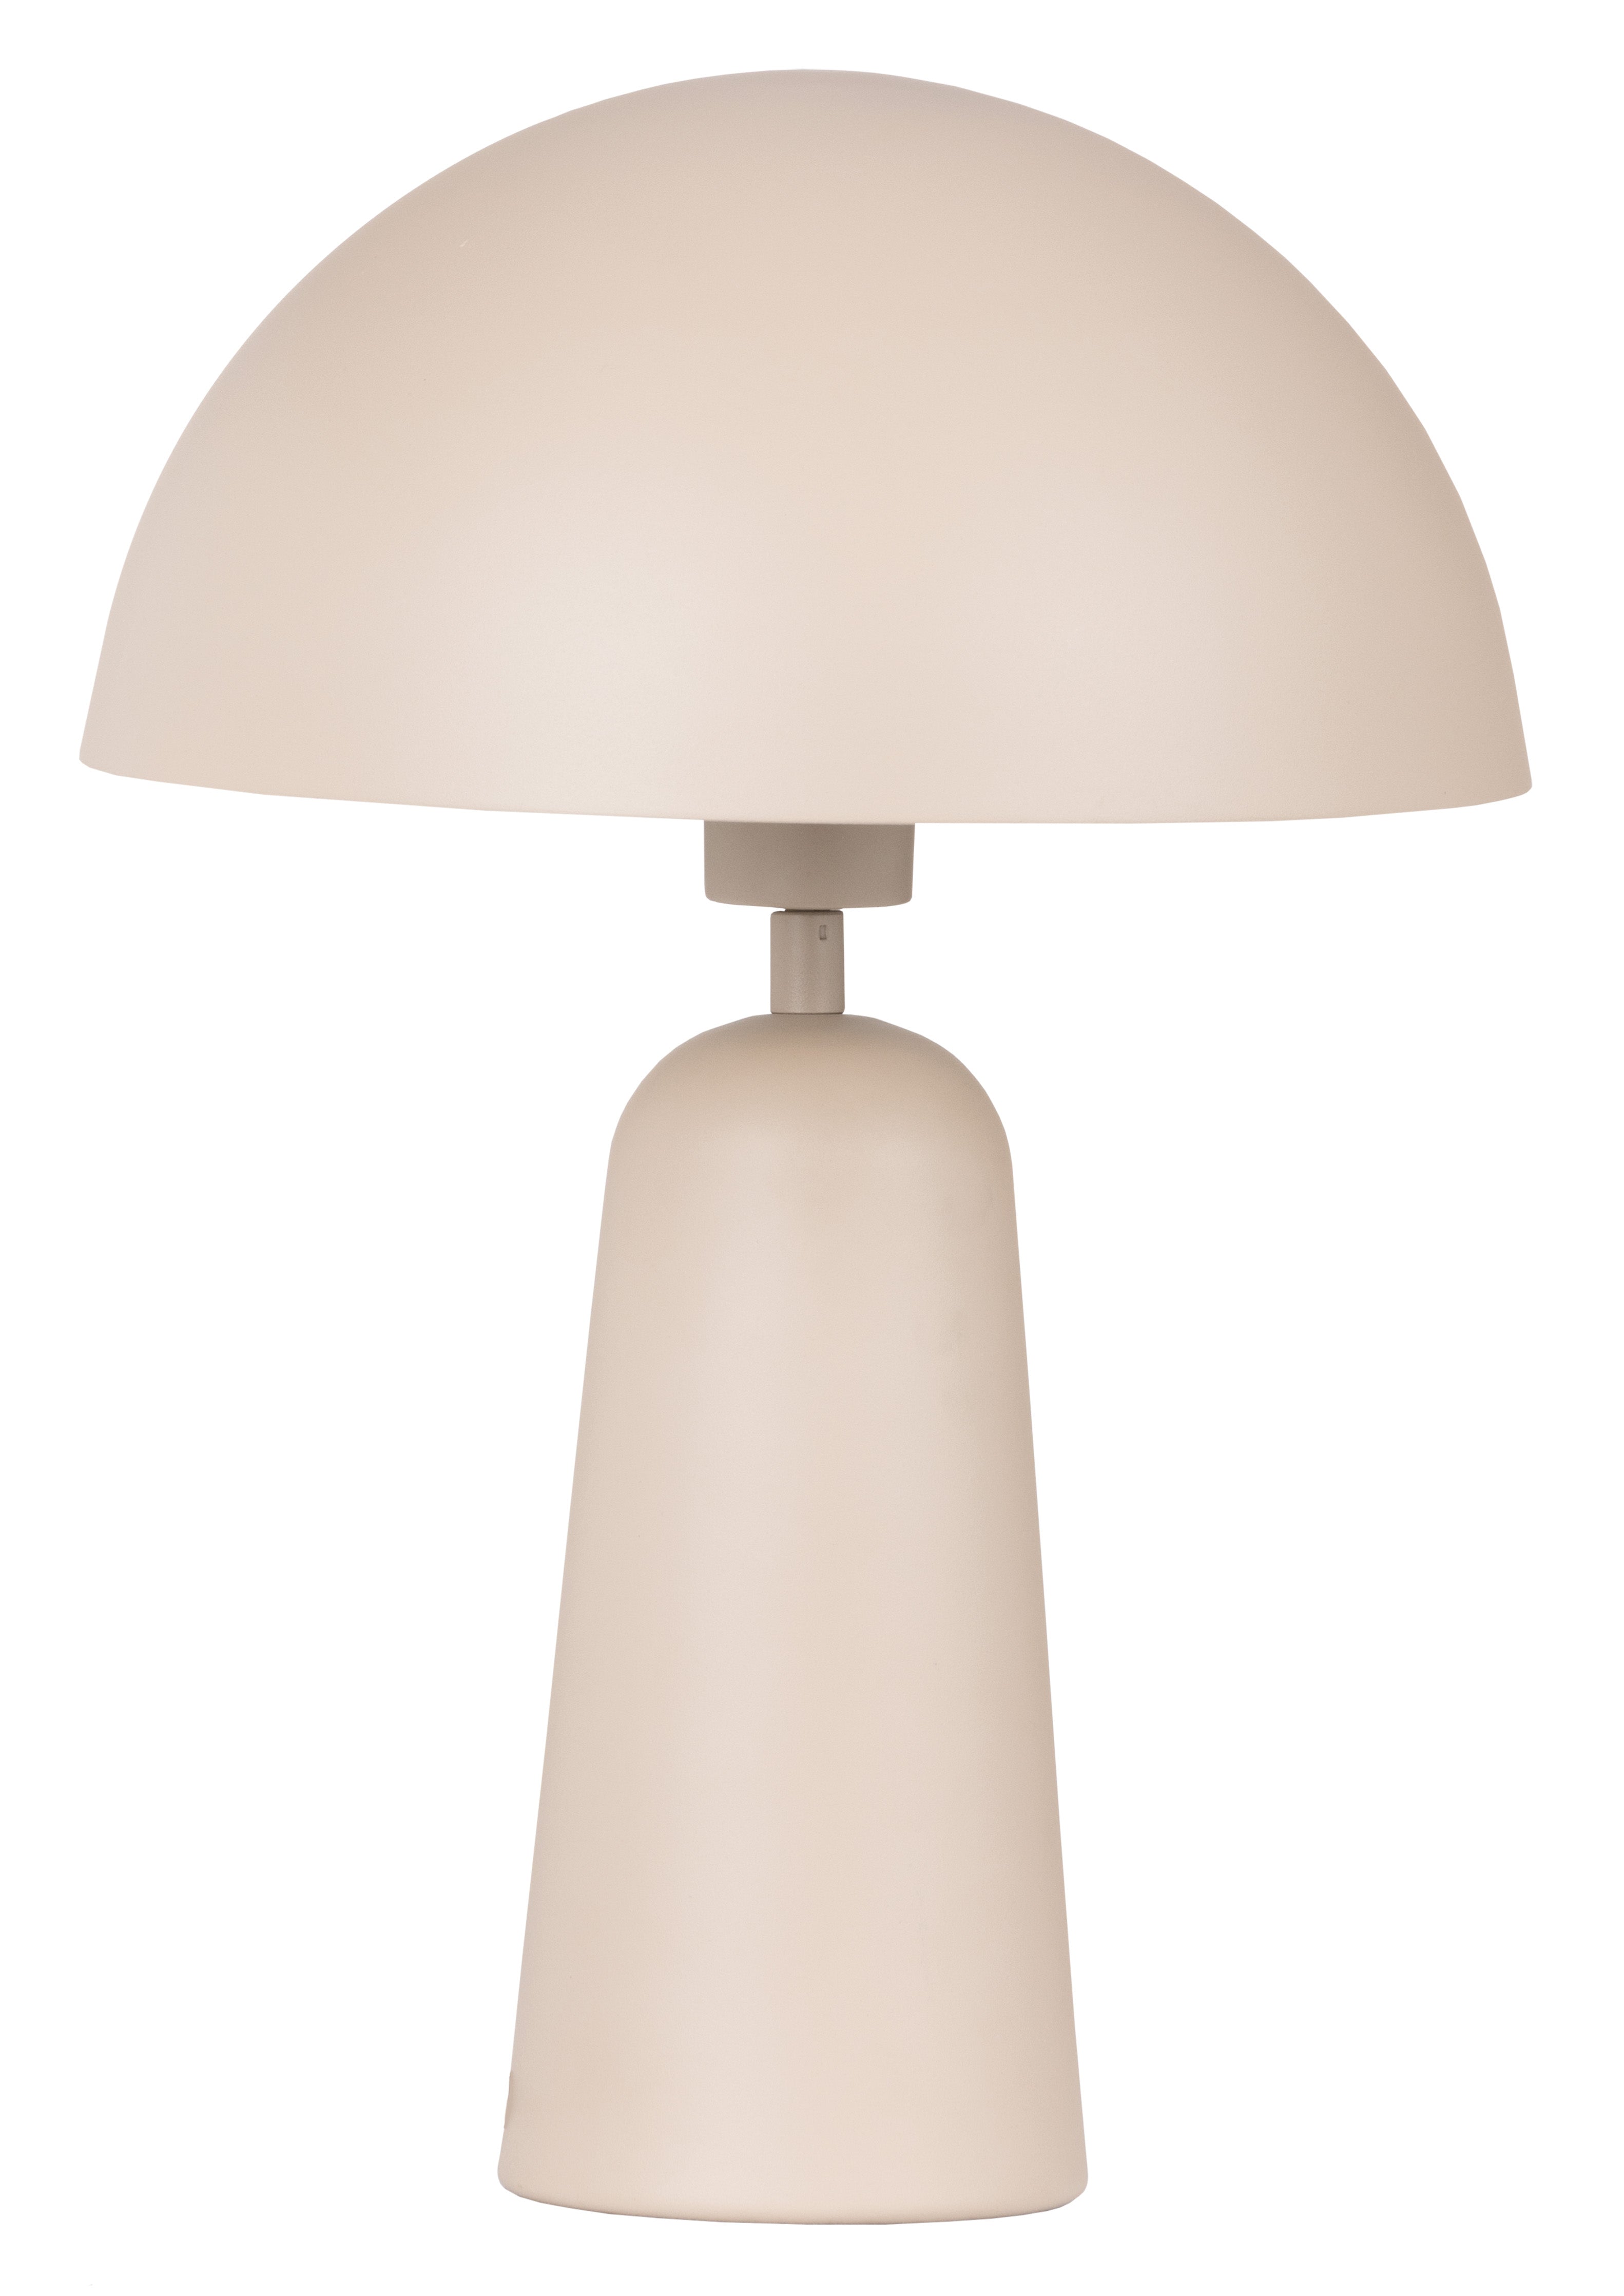 ARANZOLA Table lamp Beige - 206032A | EGLO